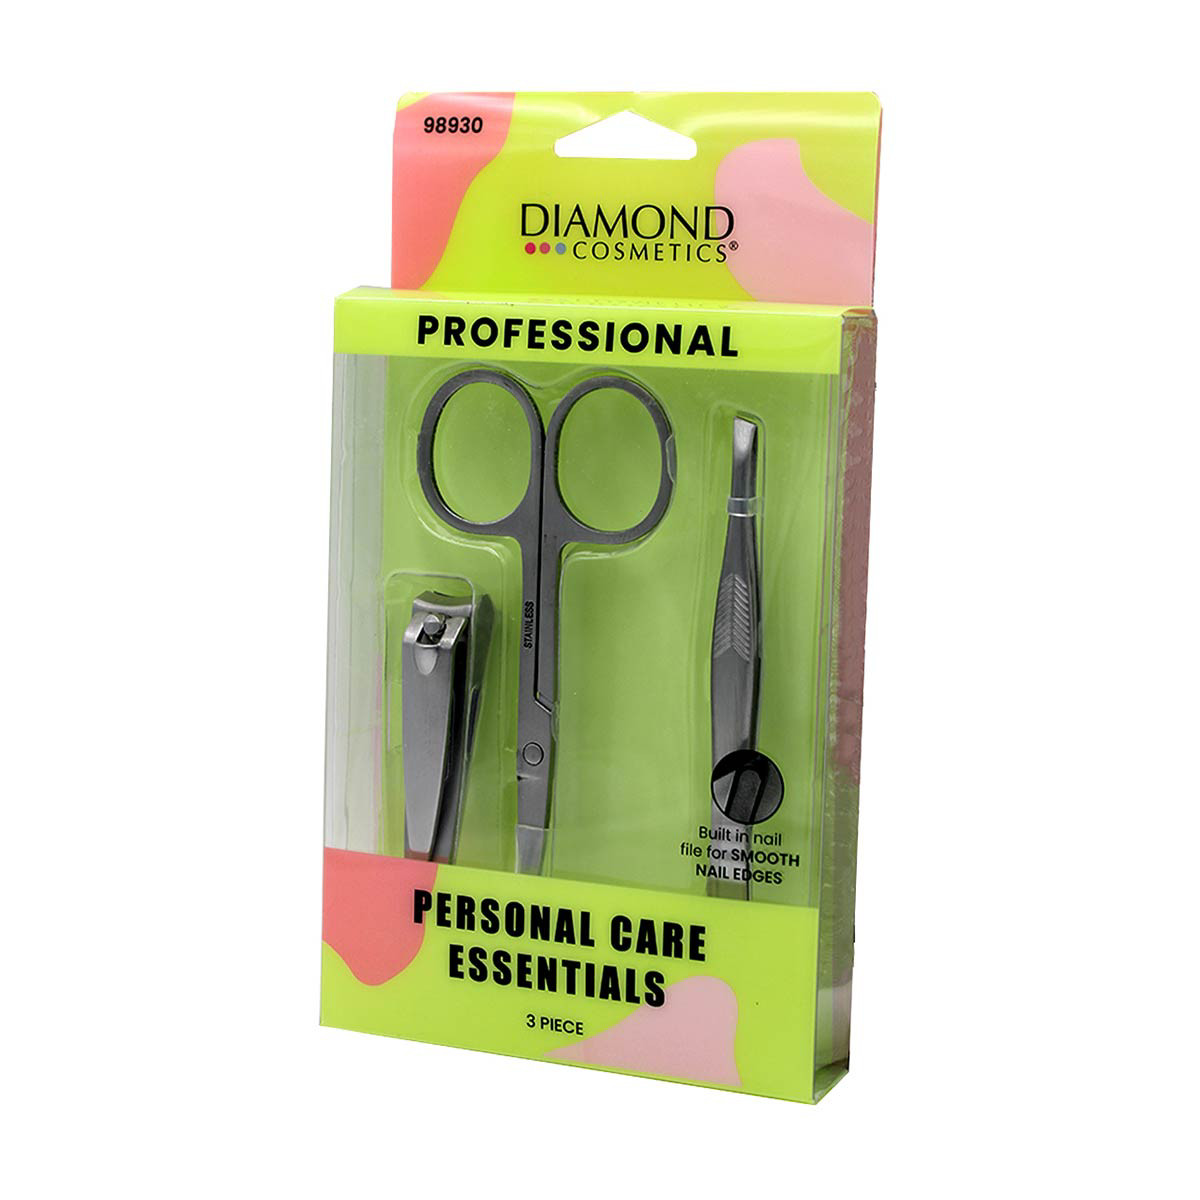 Diamond Cosmetics Personal Care Essentials Kit